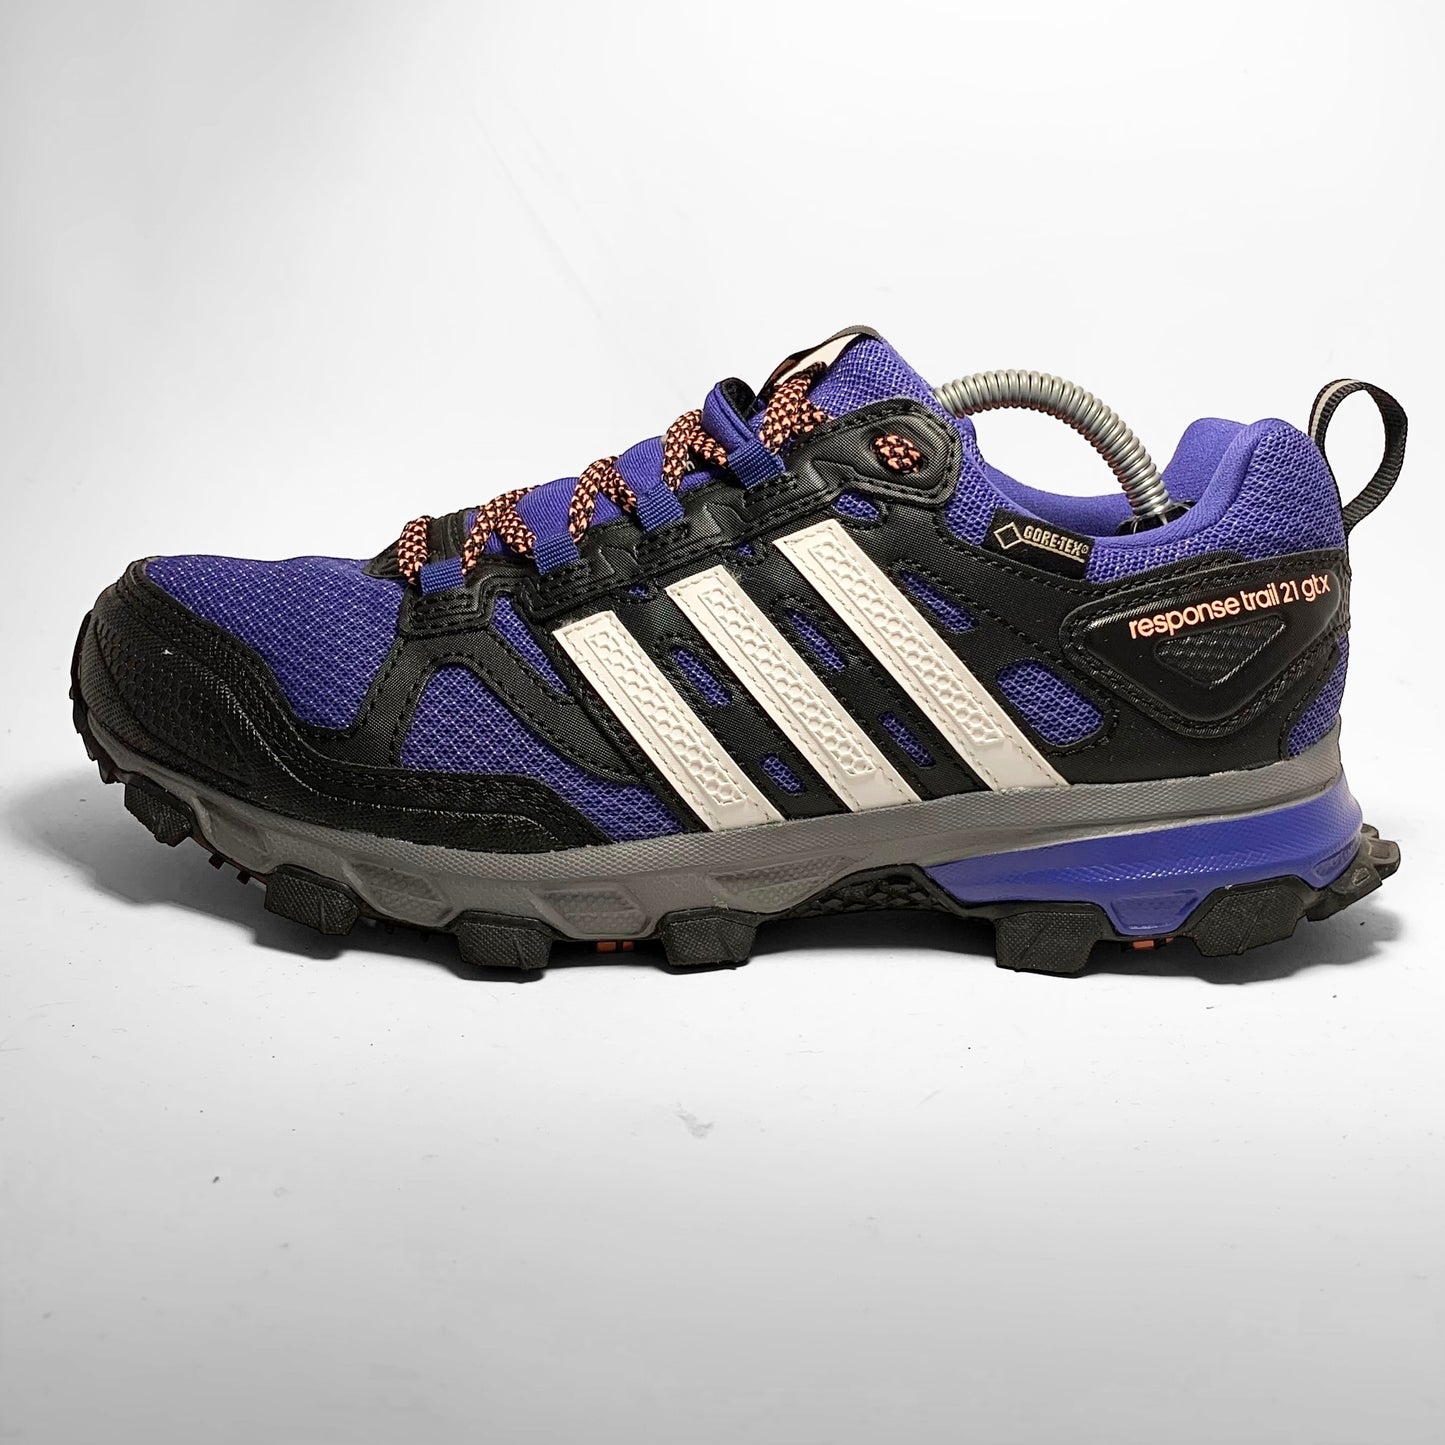 Adidas Response Trail 21 GTX (2014)